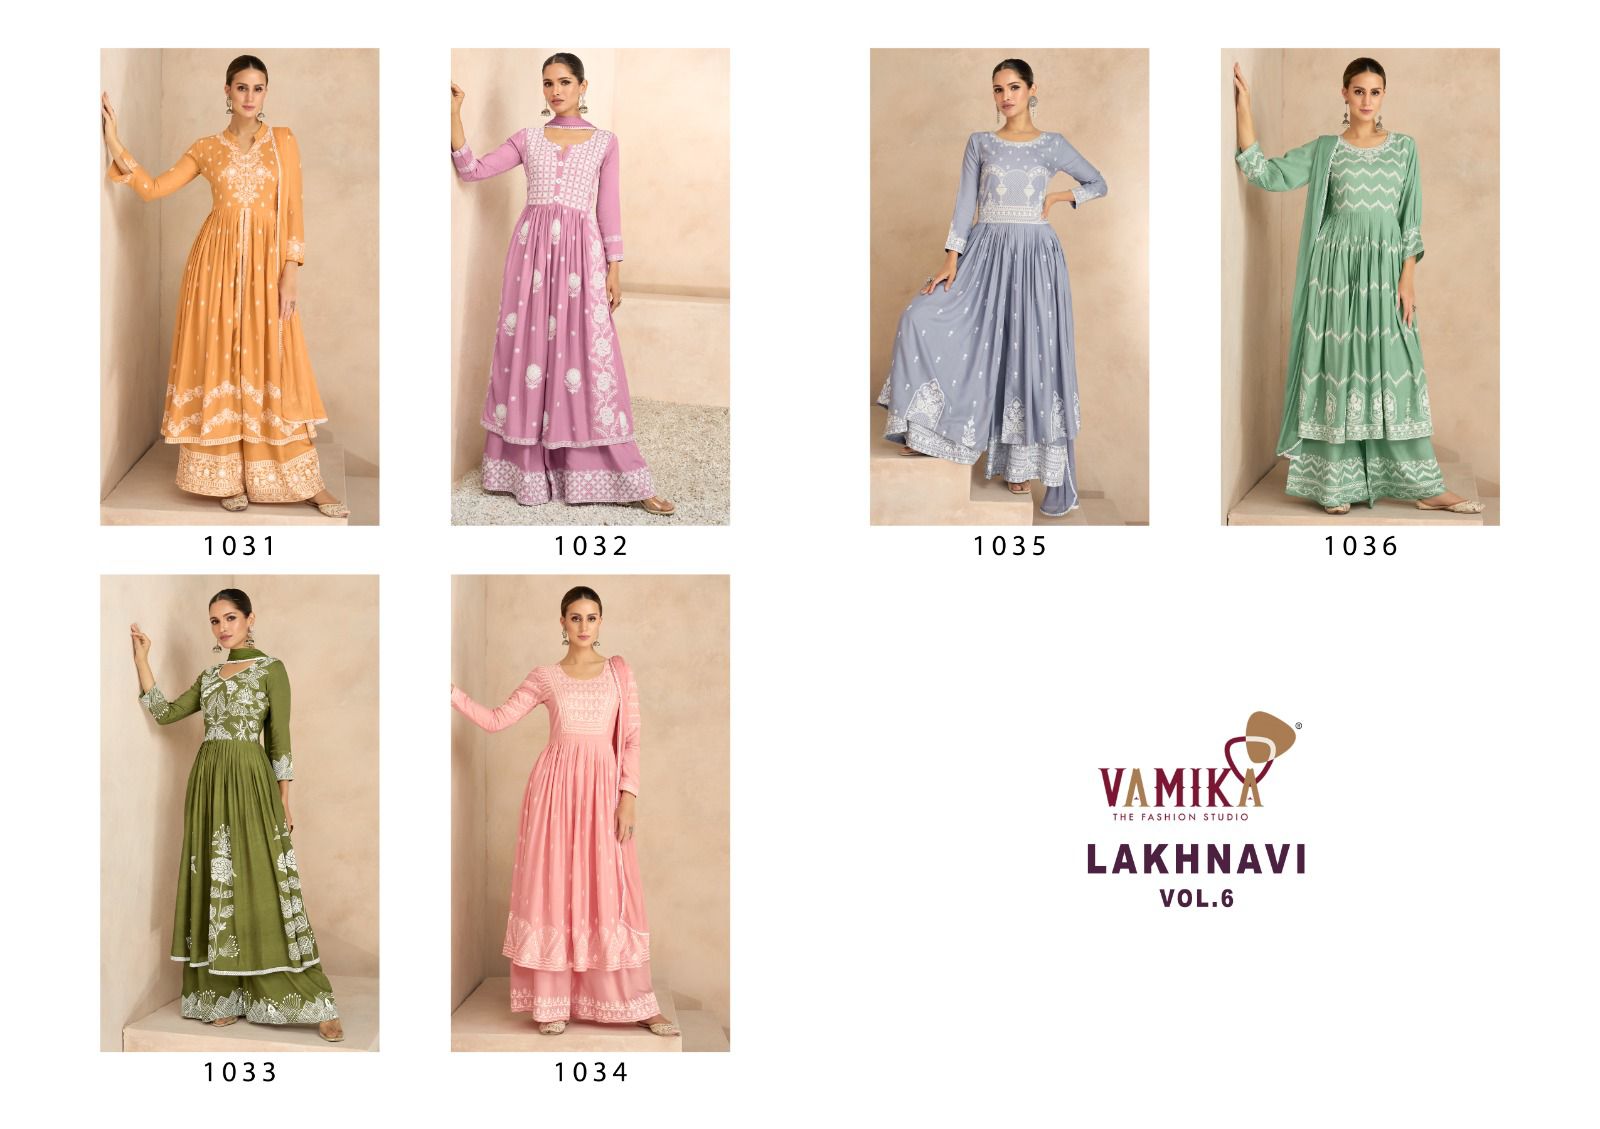 Vamika Lakhnavi Vol 6 collection 7